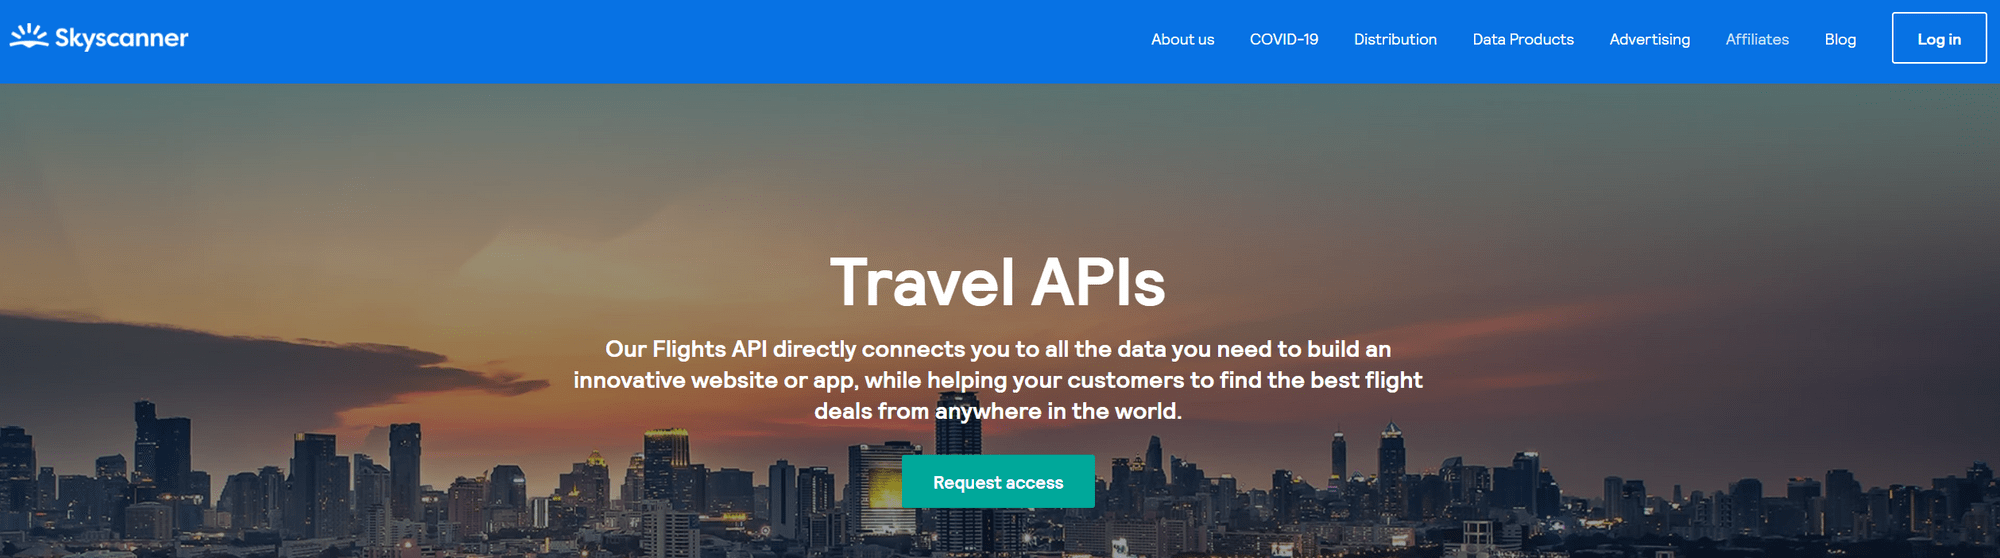 Travel APIs.